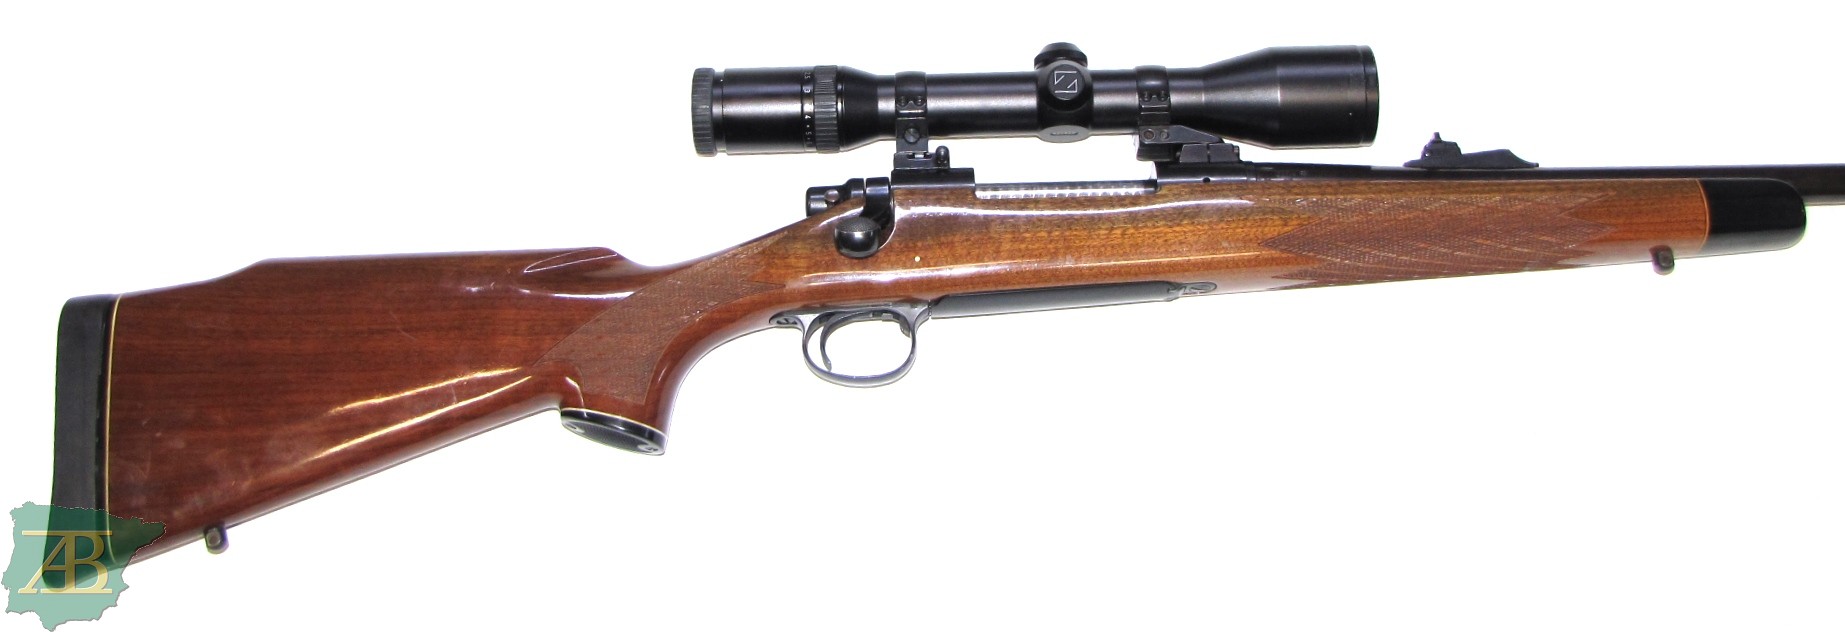 Rifle de cerrojo de caza REMINGTON 700 Ref 7834-armeriaiberica-2